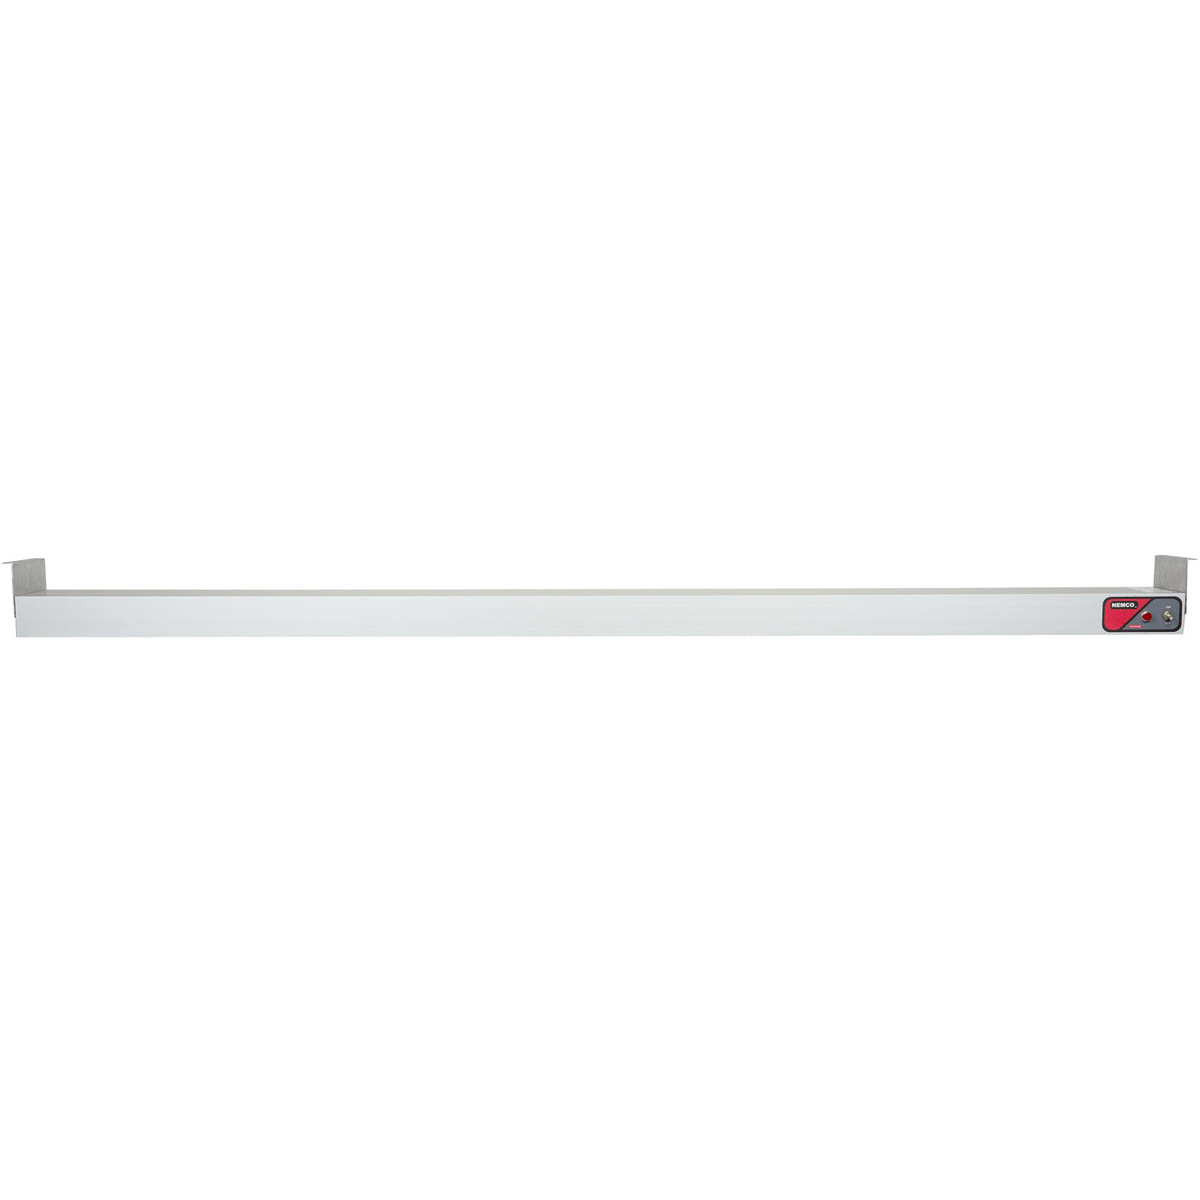 Nemco 6150-72-208 Strip Type Heat Lamp